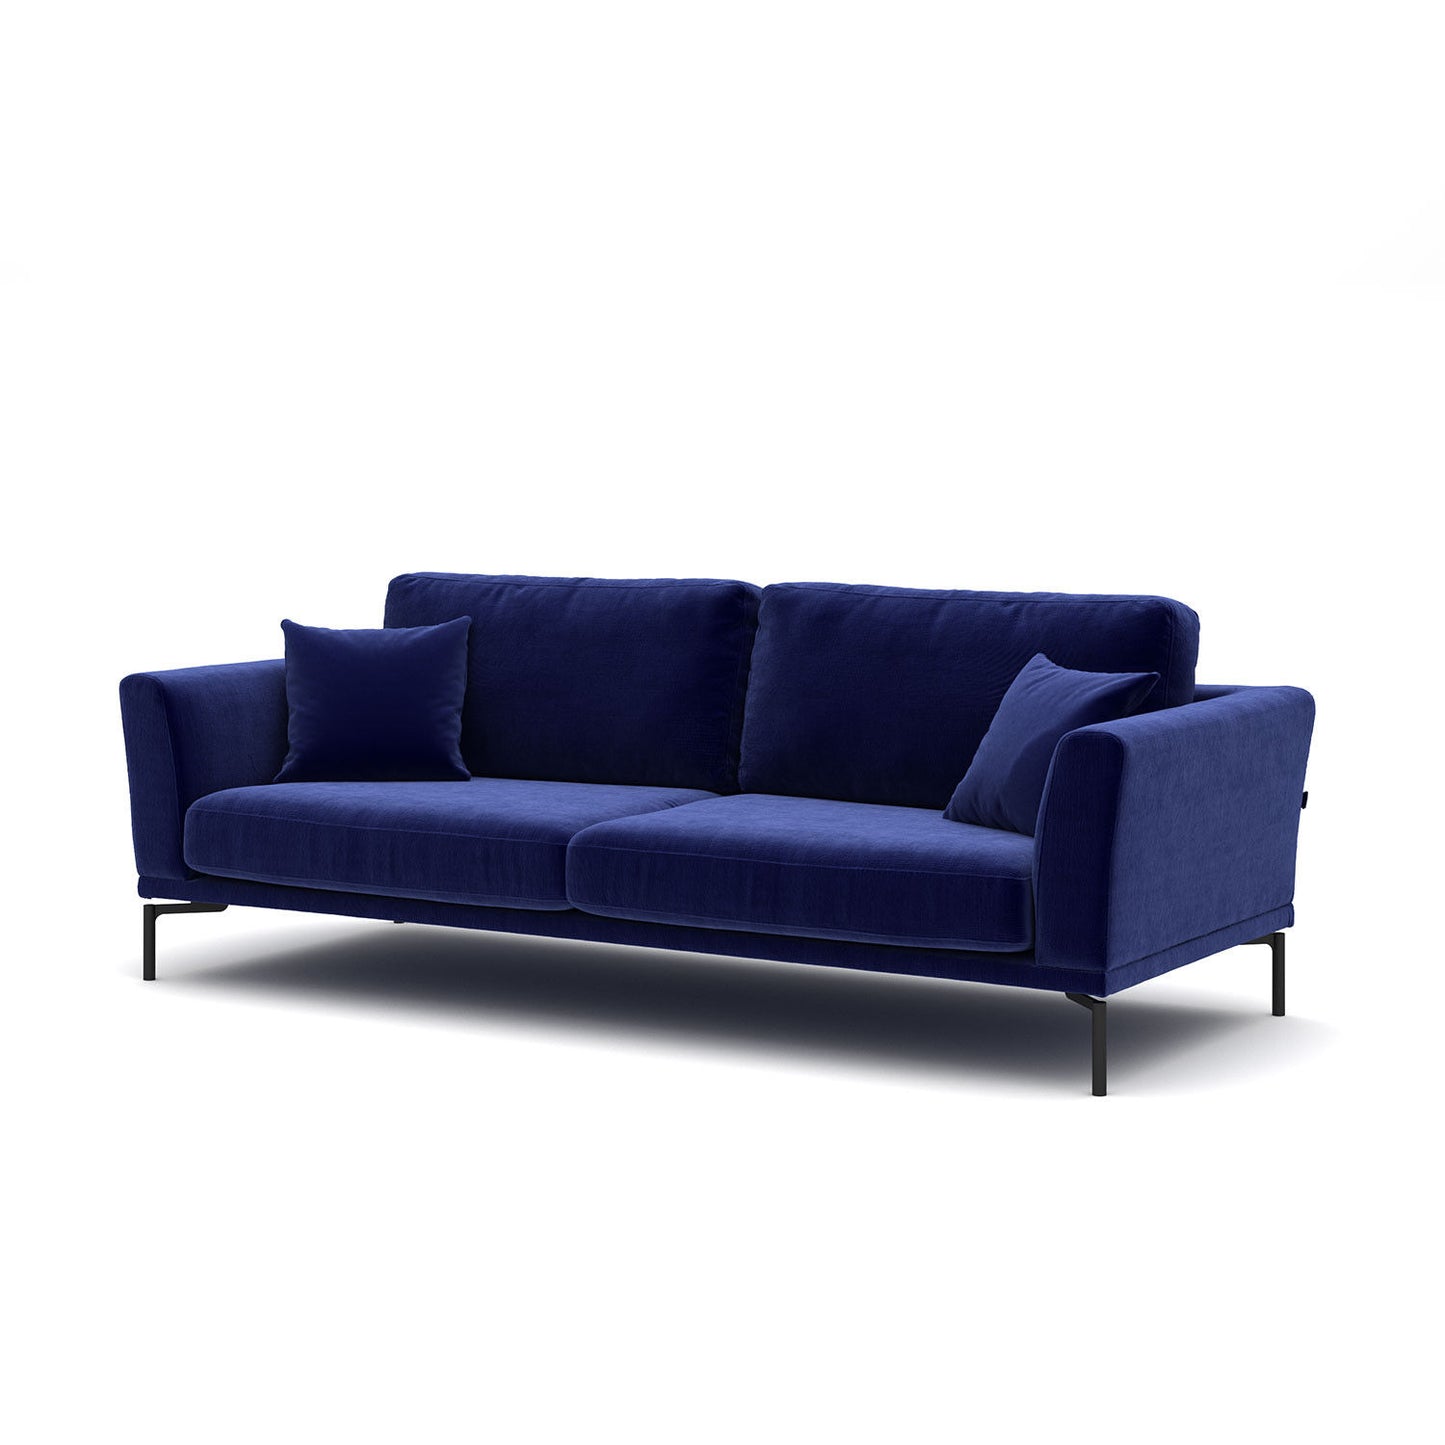 Jade - 3-sæders sofa